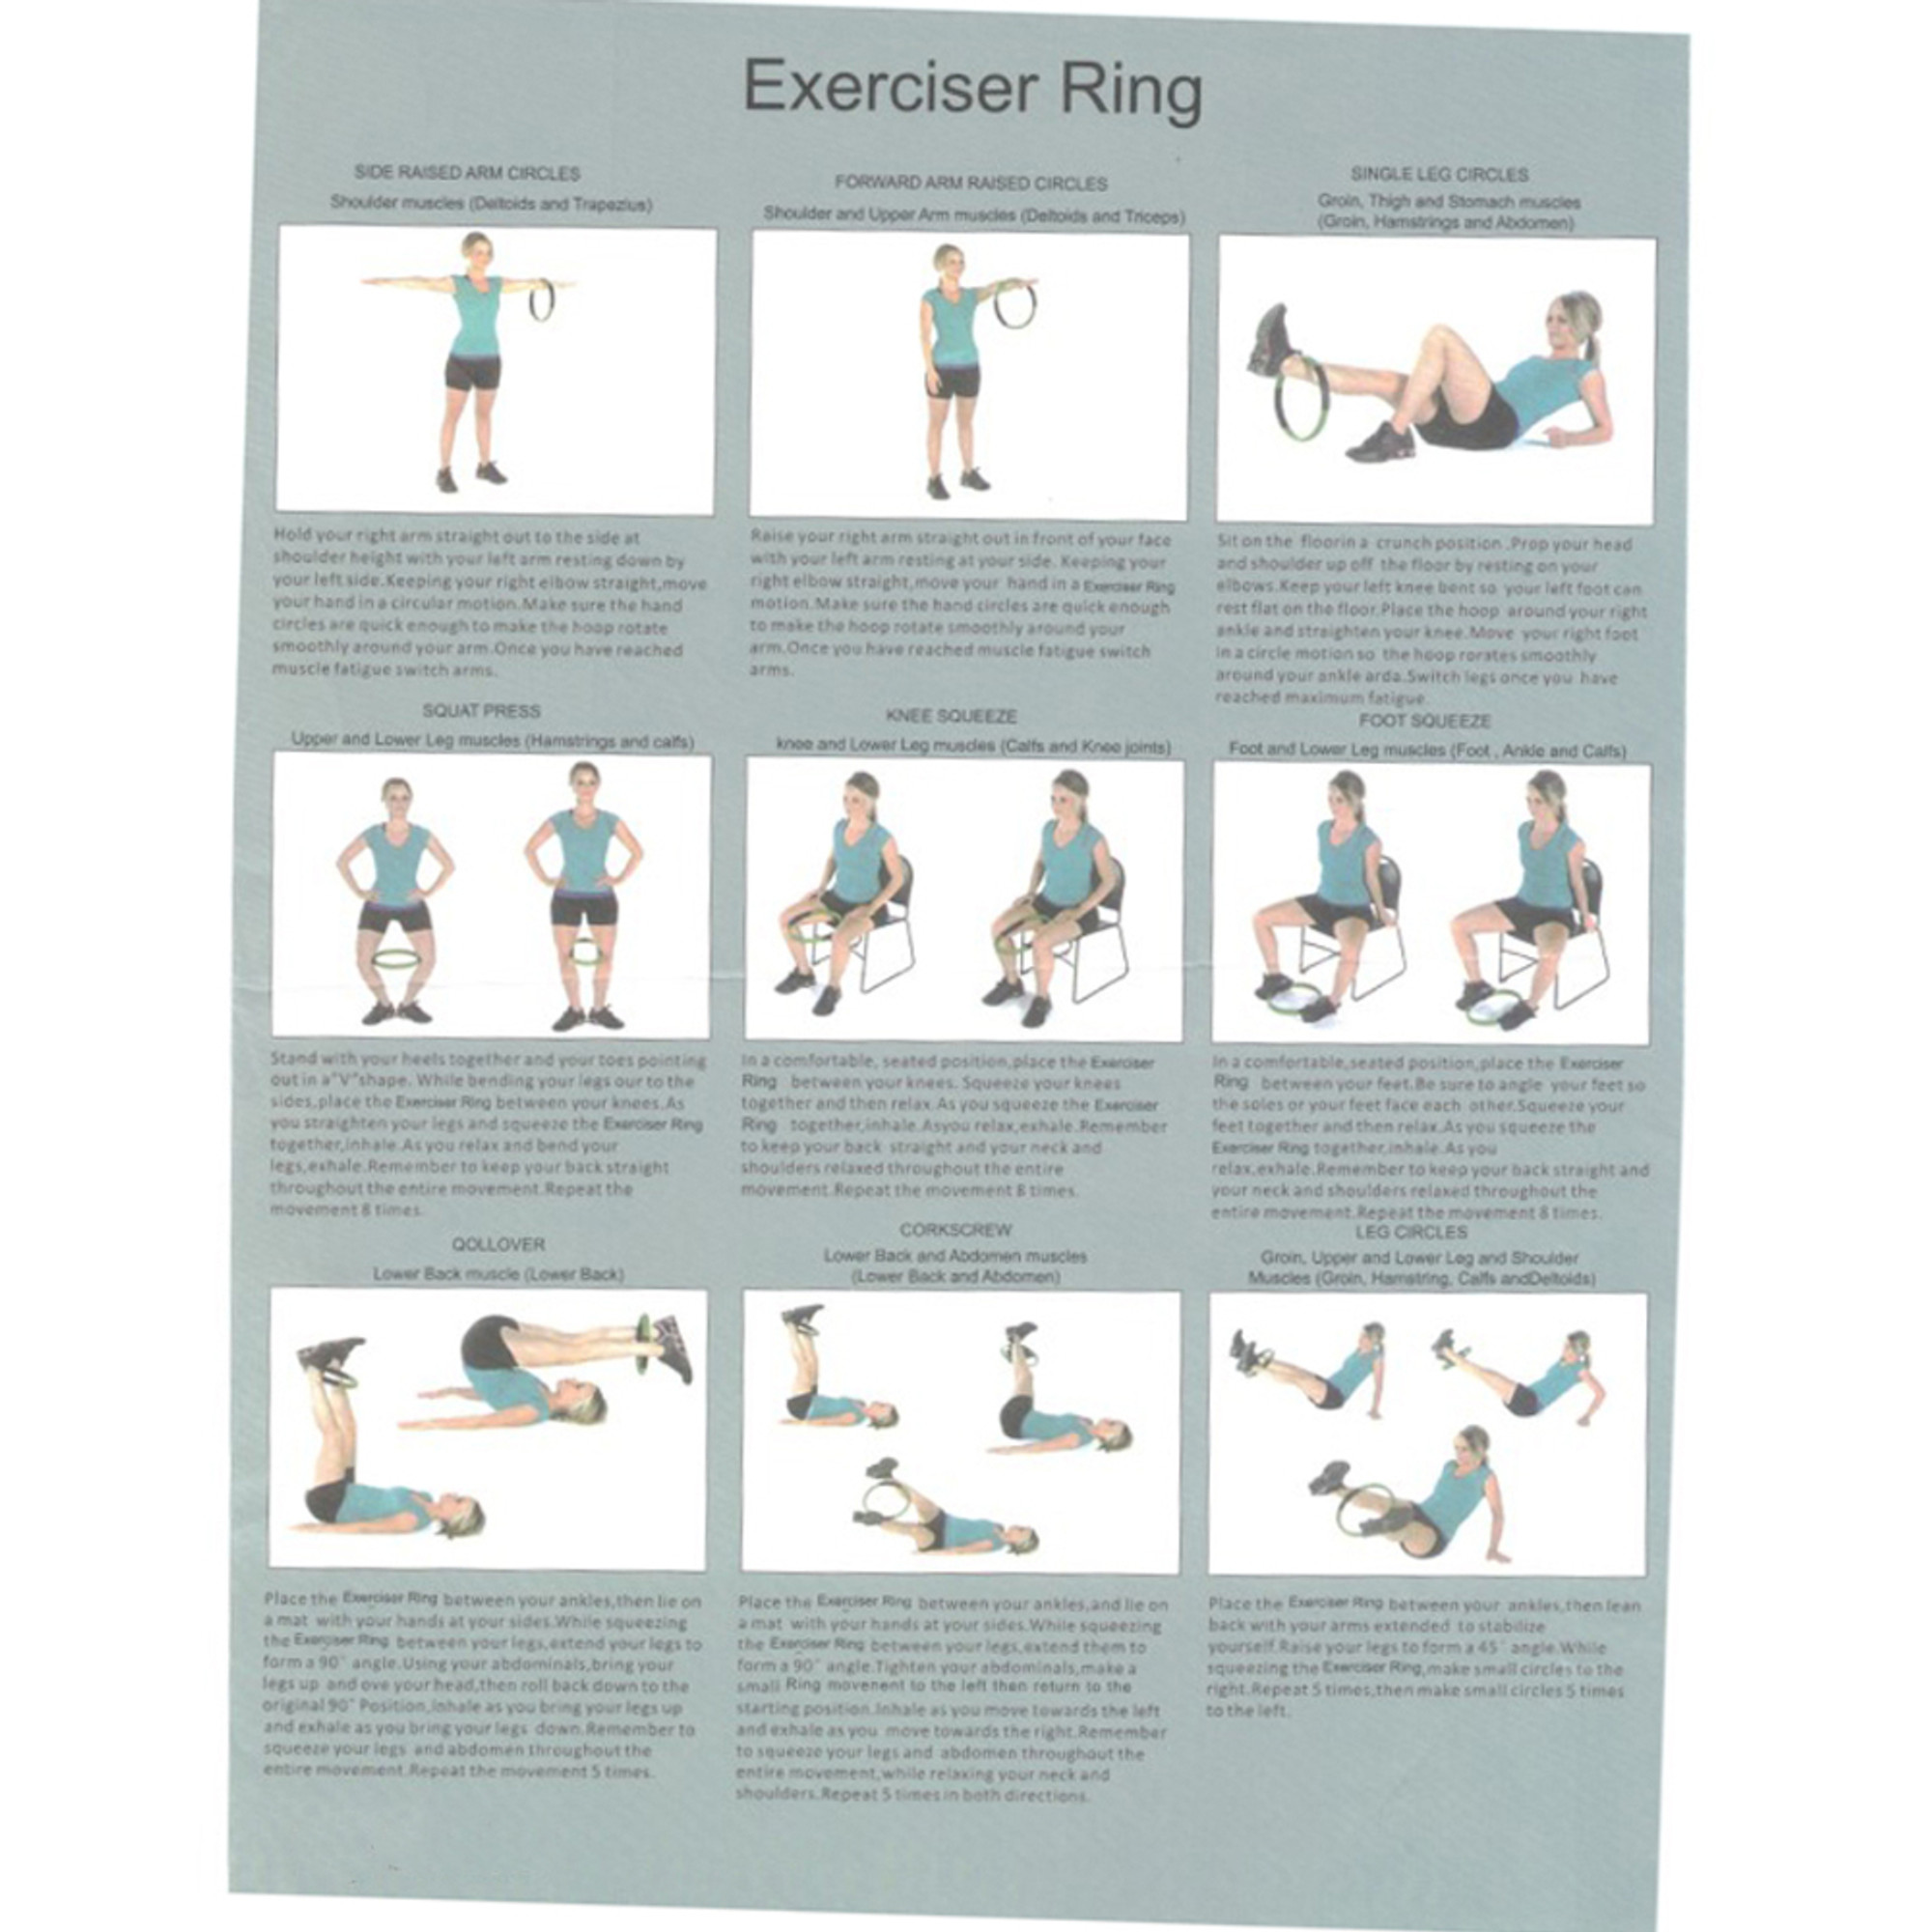 2 Pack Yoga Ring Pilates Exercise Fitness Rings Magic Circle Neck